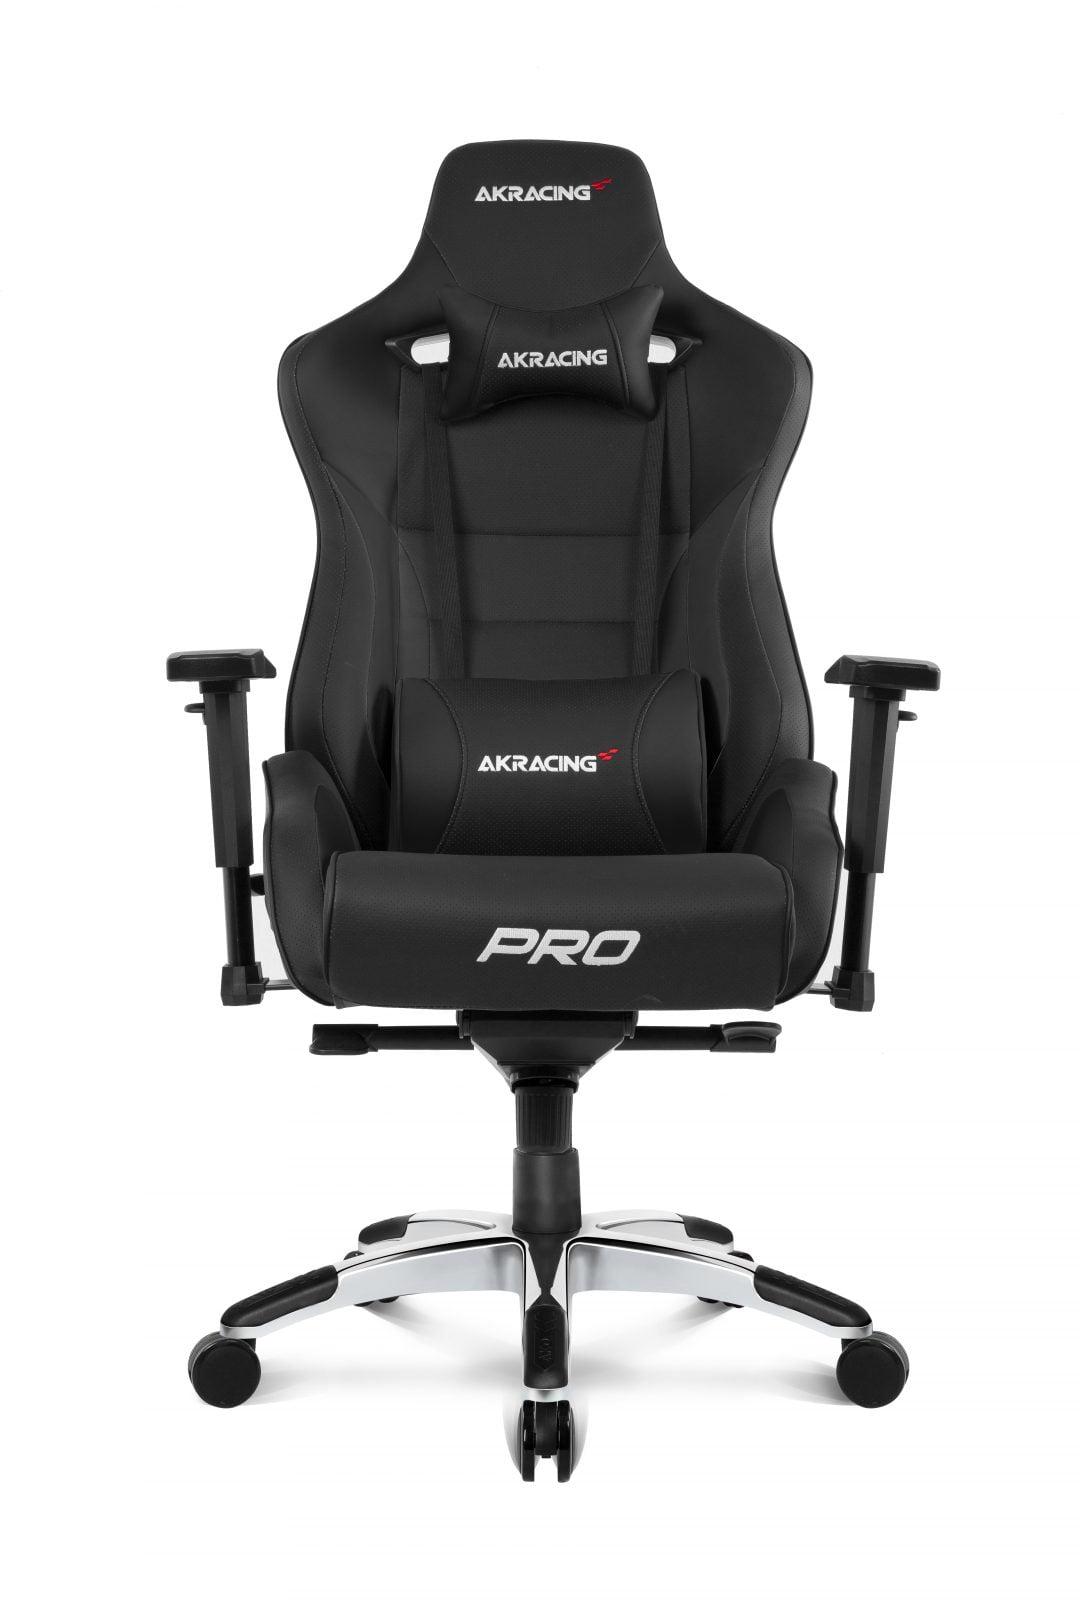 AKRacing Chair, Pro Blue Gaming